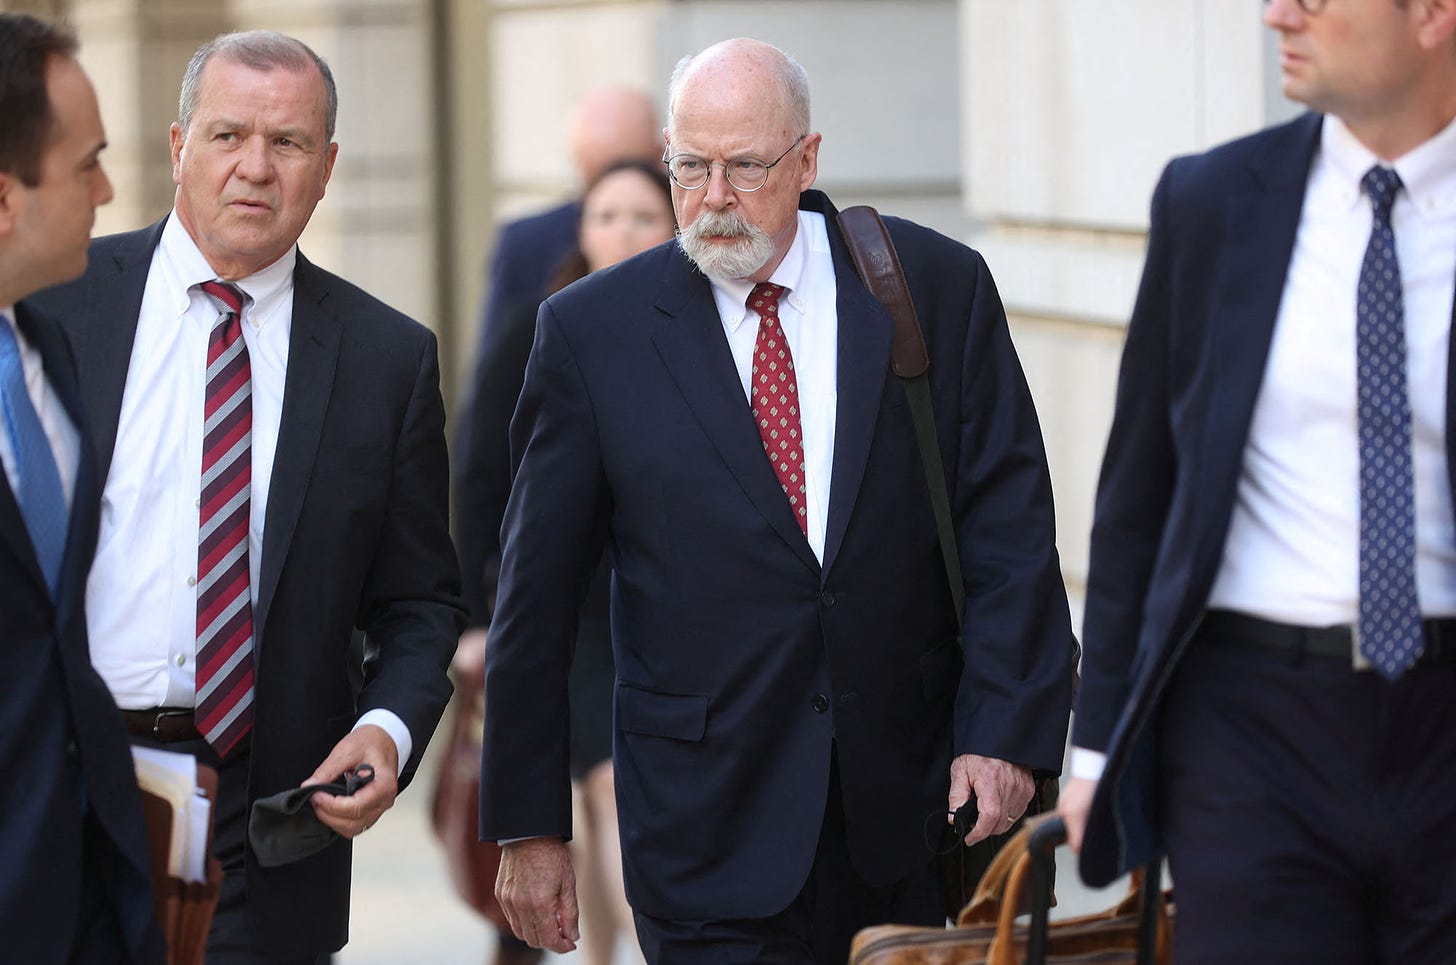 Clinton lawyer Michael Sussmann will not testify at FBI trial